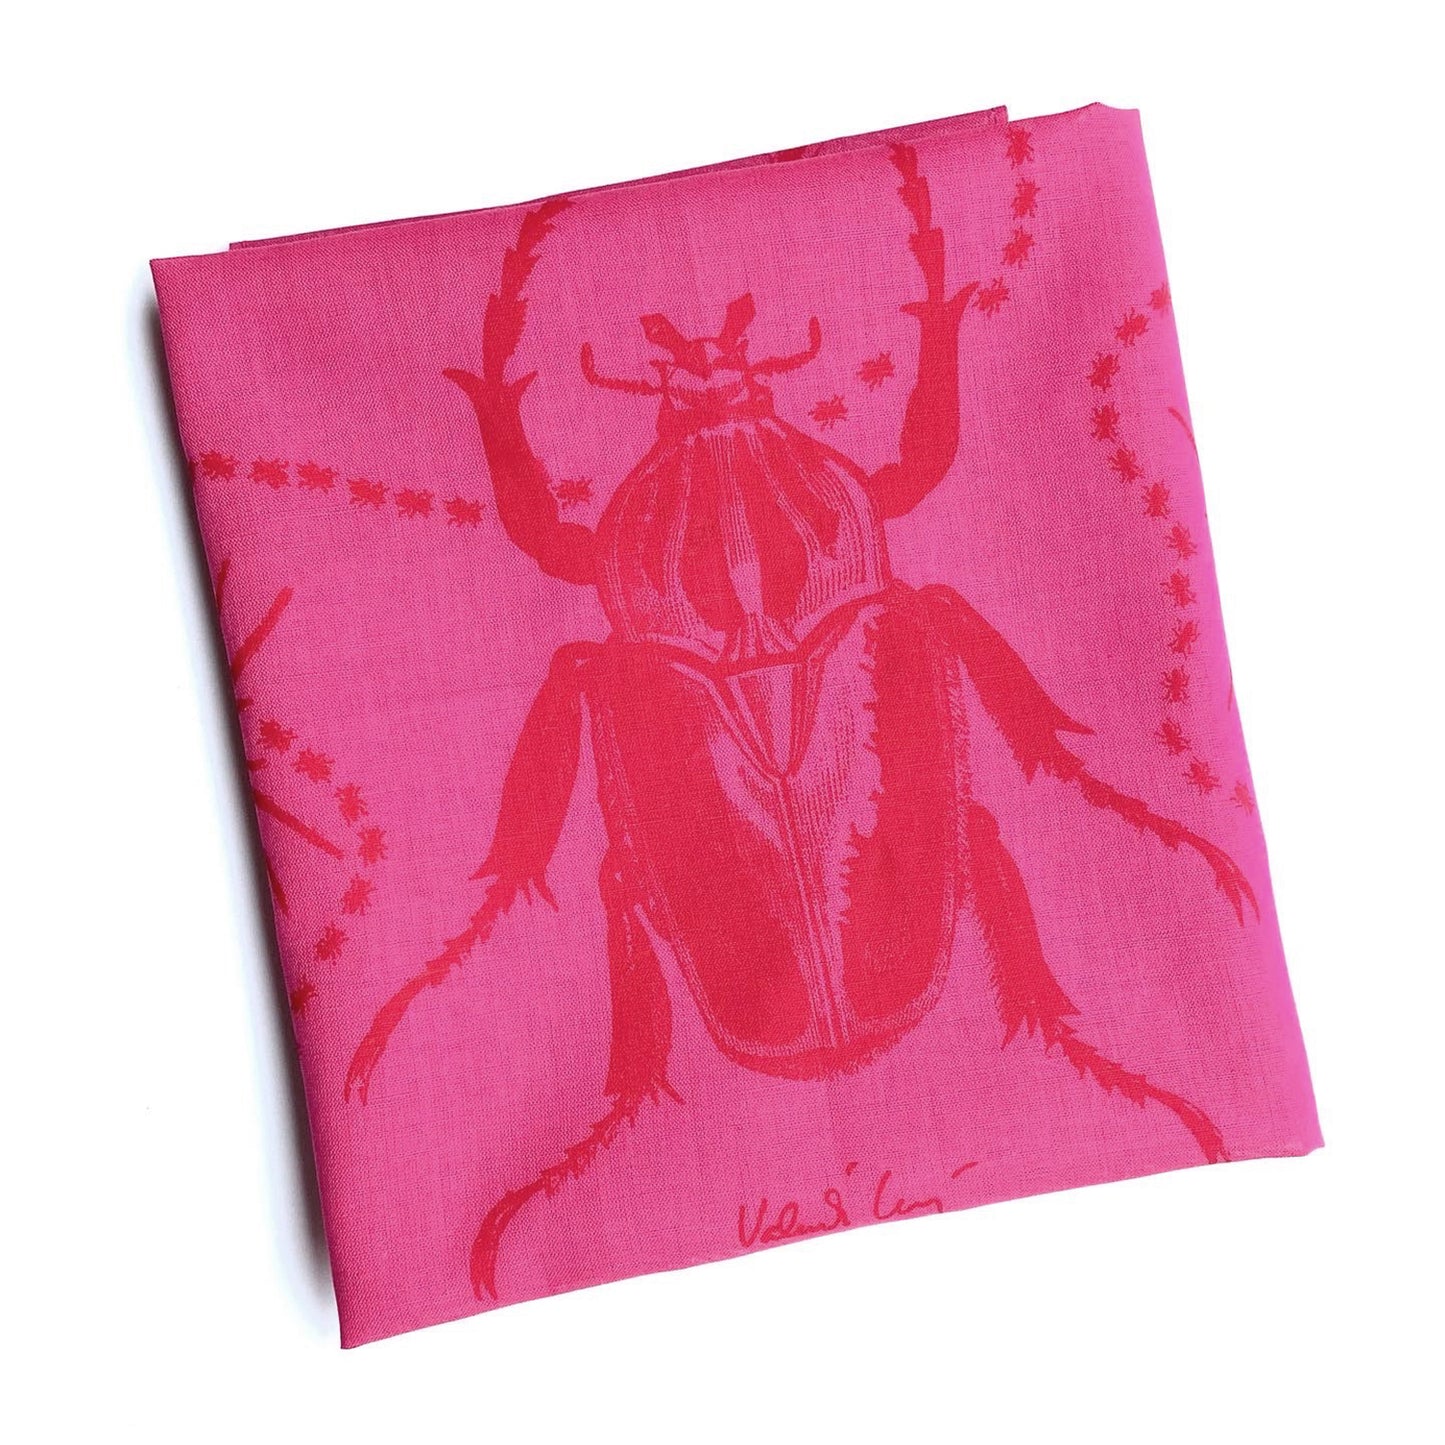 Bug design bandana